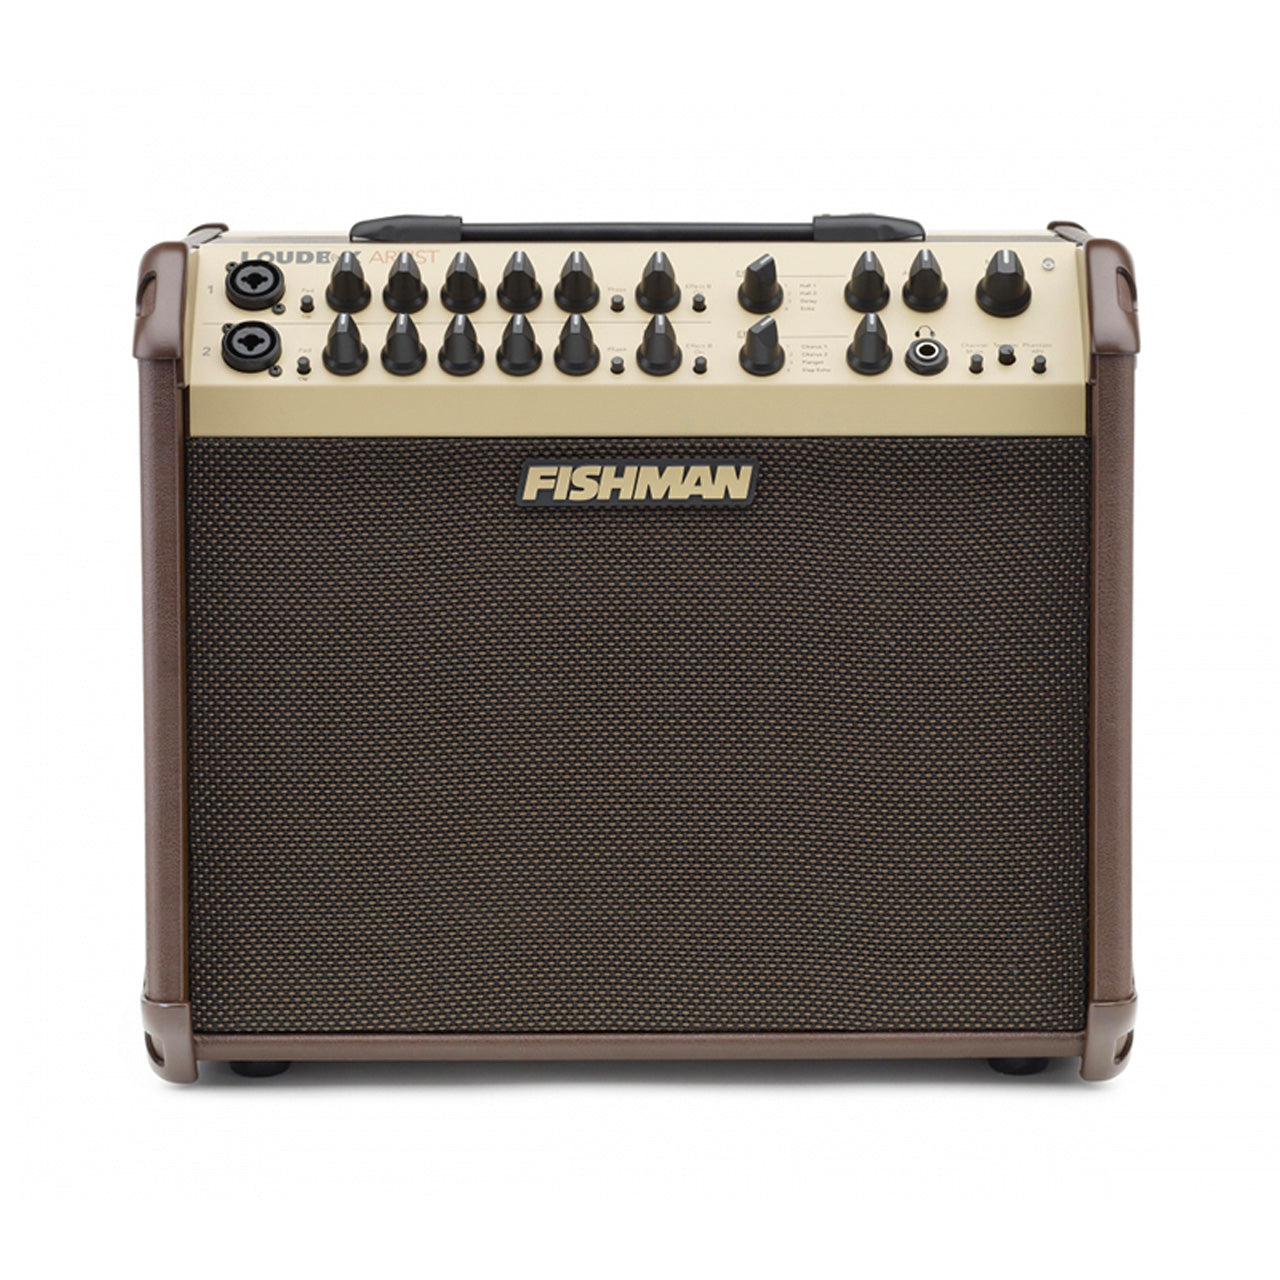 Fishman PRO-LBX-600 Loudbox Artist Amplifier, front